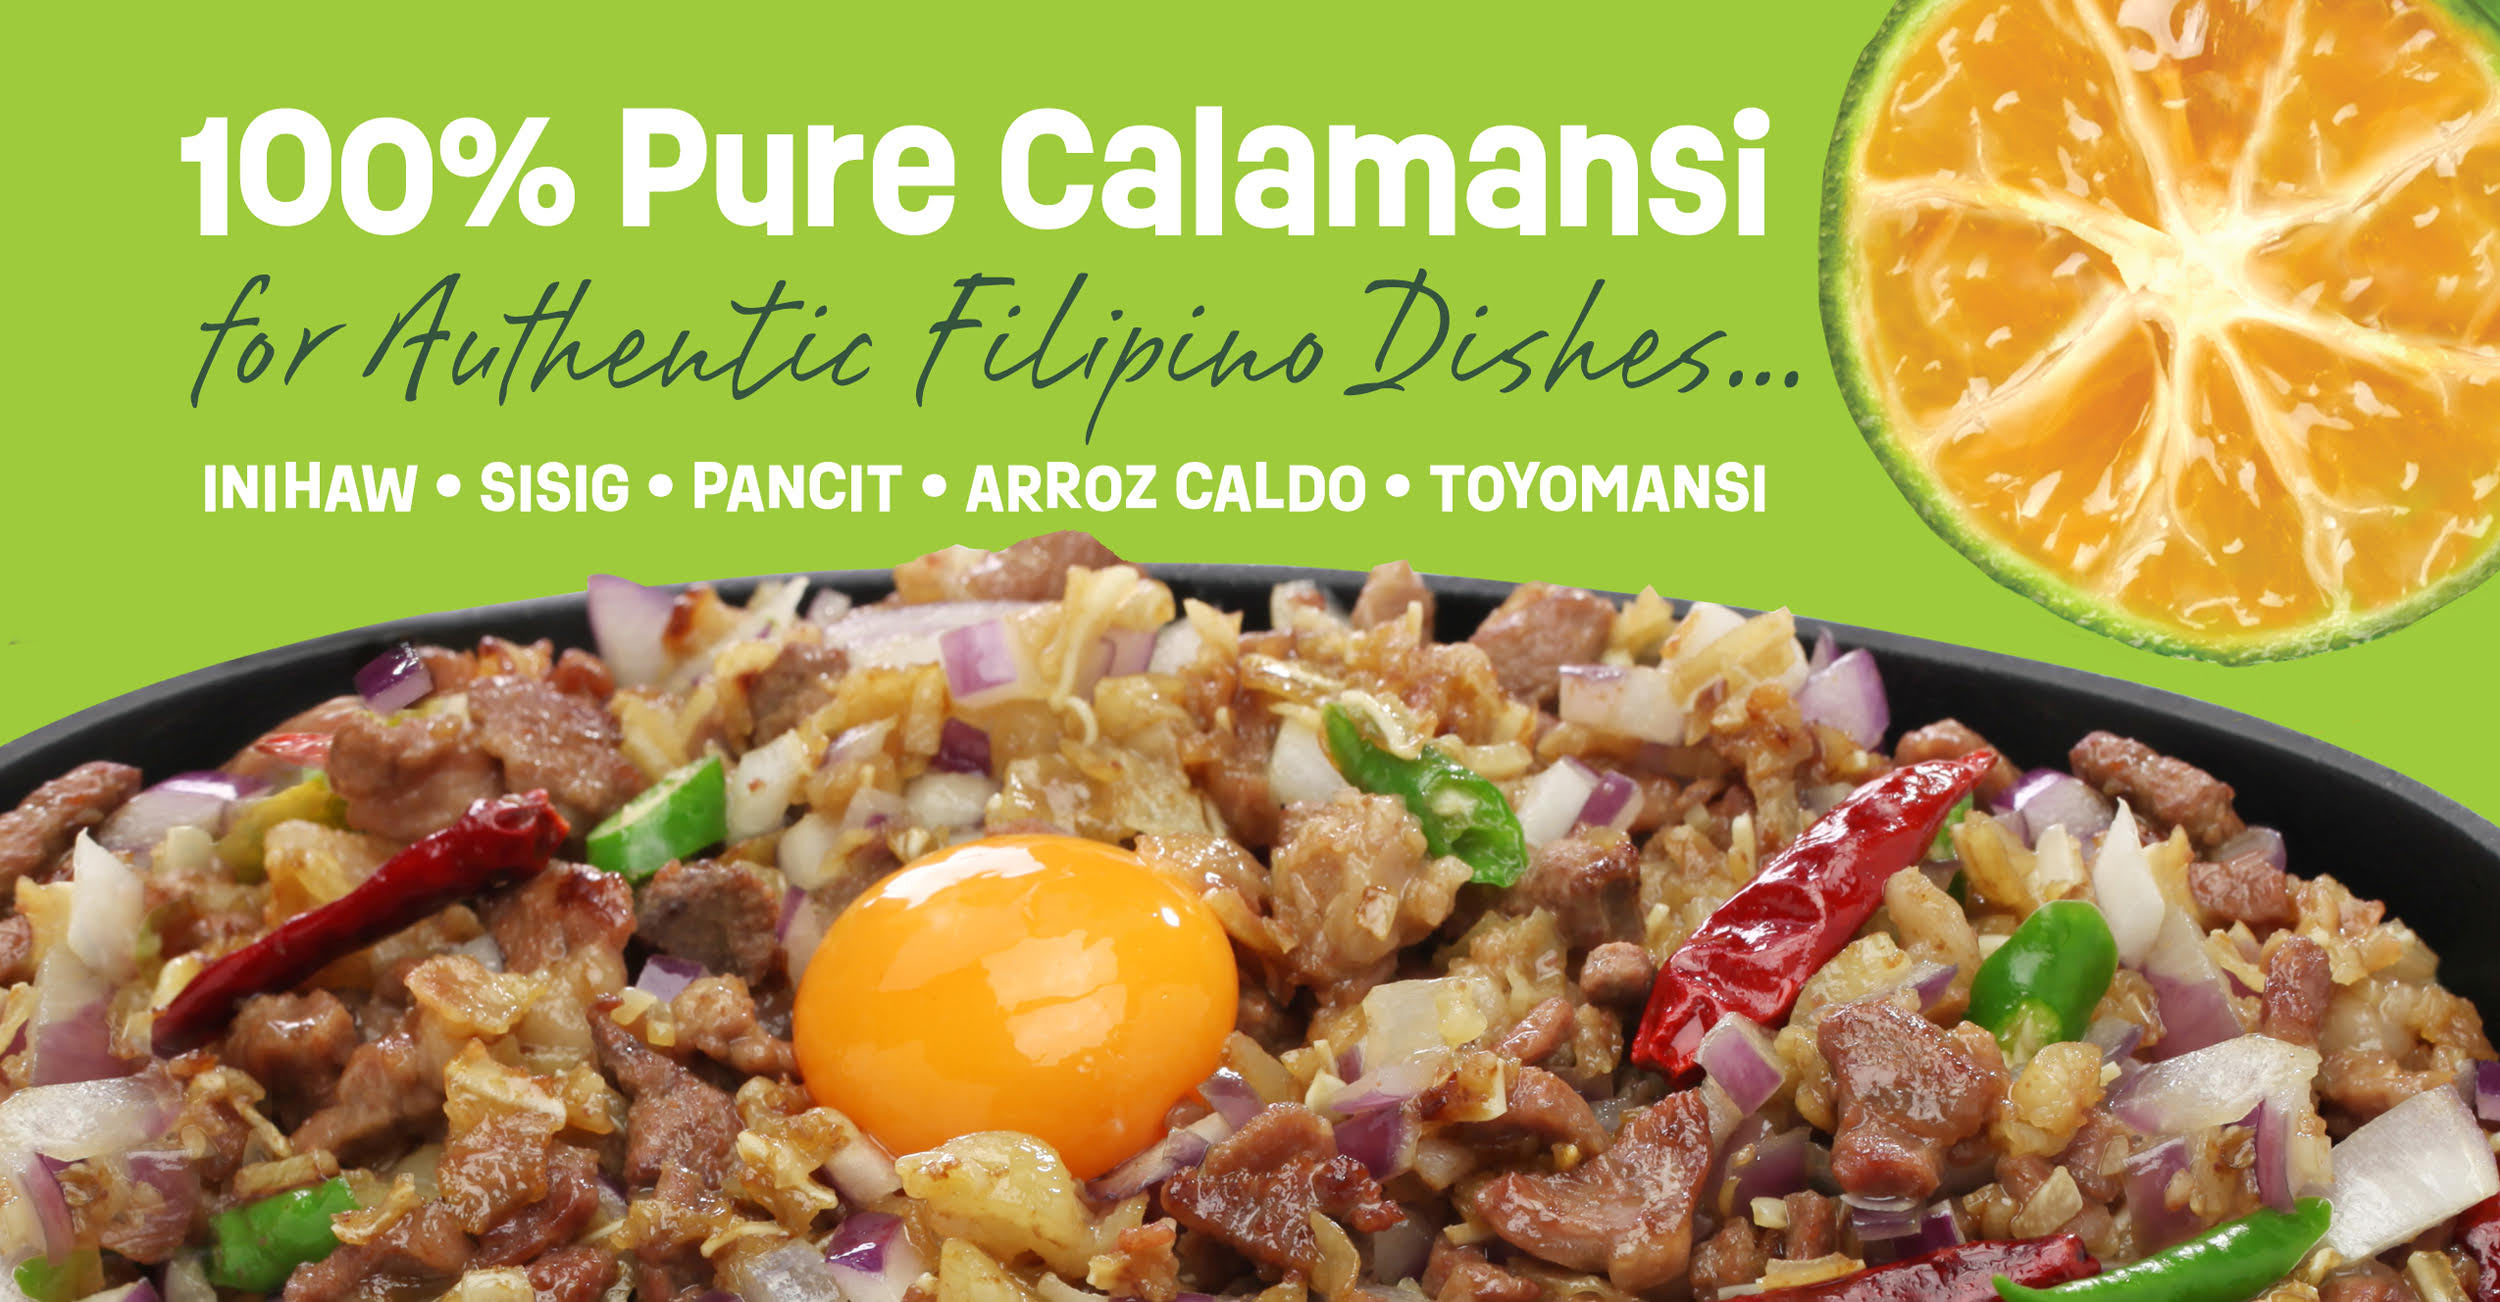 100% Pure Calamansi for authentic Filipino dishes: Inihaw, Sisig, Pancit, arroz caldo, toyomansi